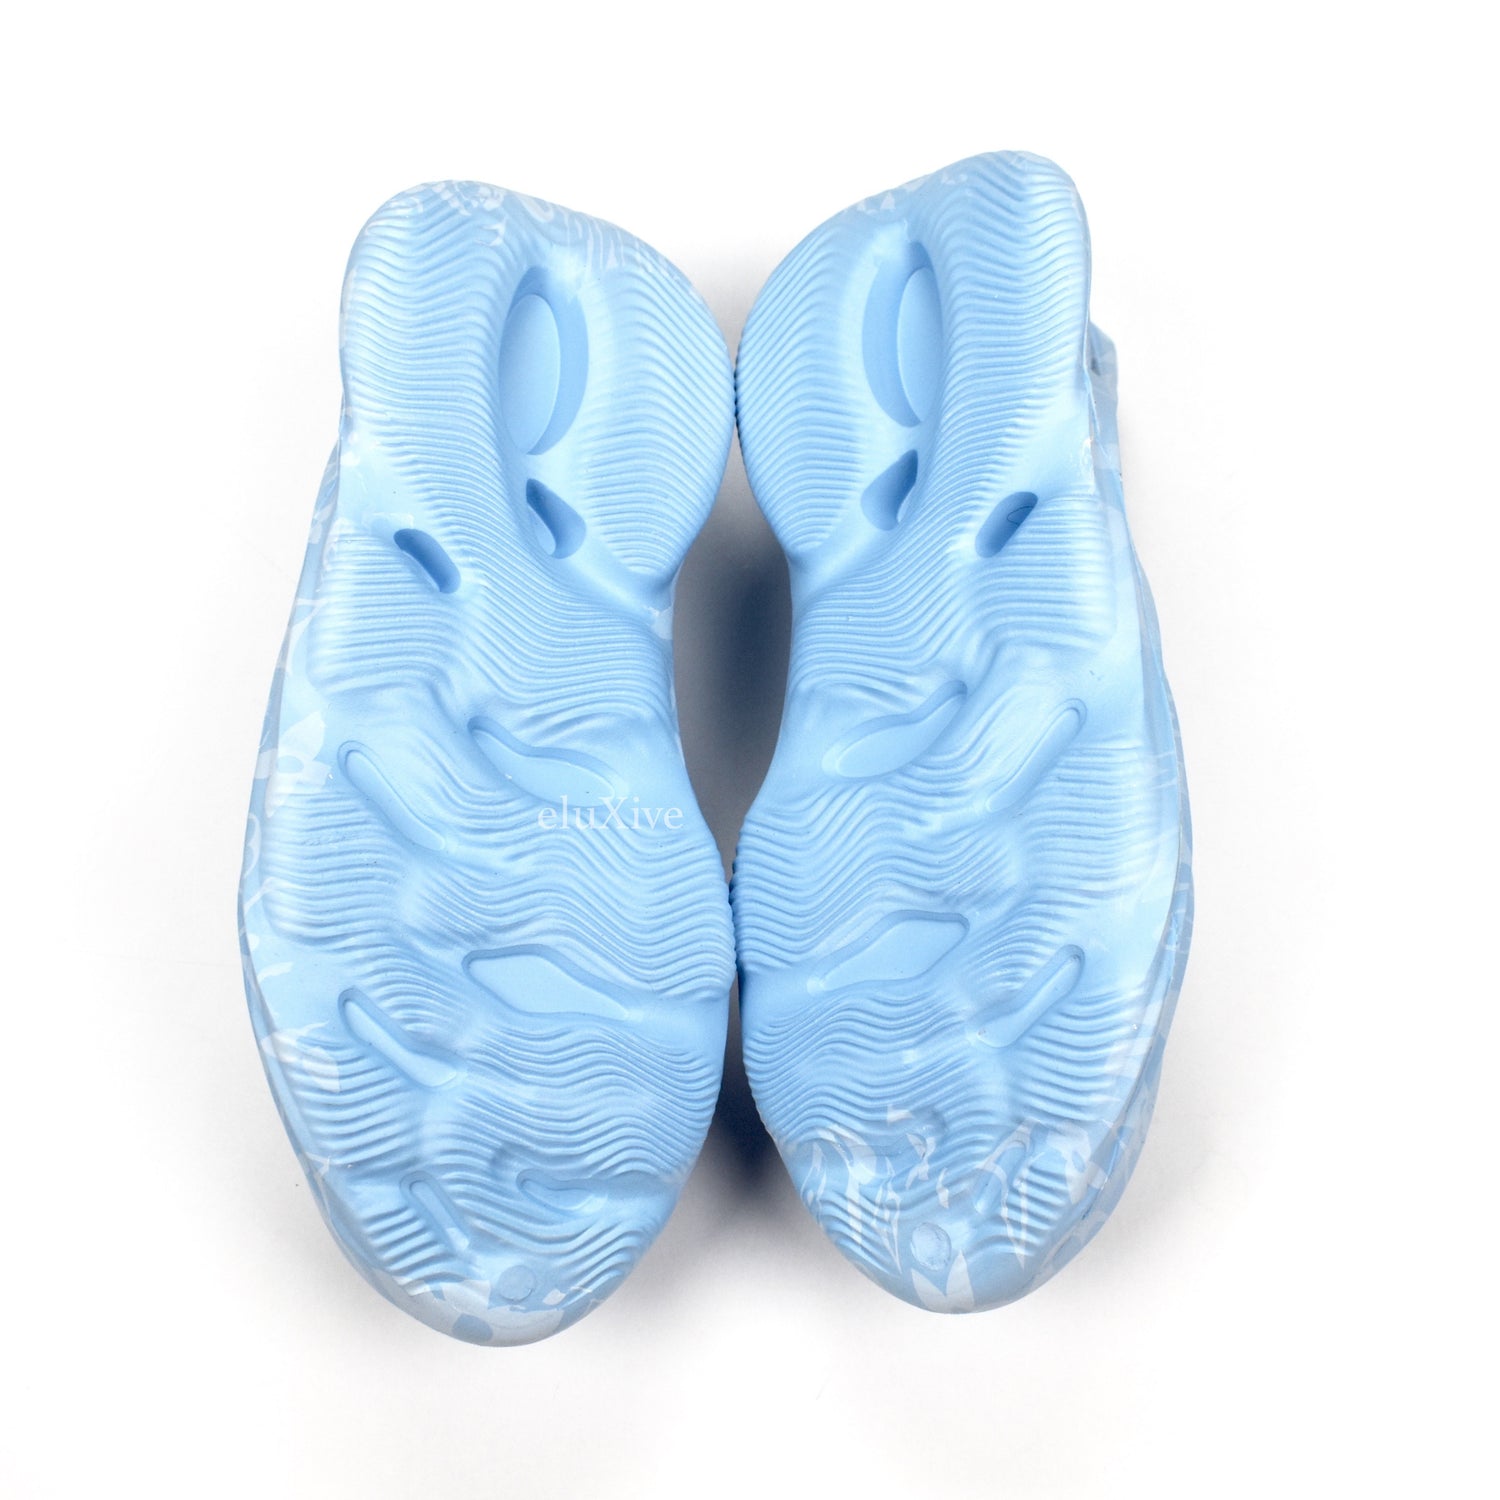 Imran Potato - LV Print 'Lobster' Foam Runner (Blue) – eluXive